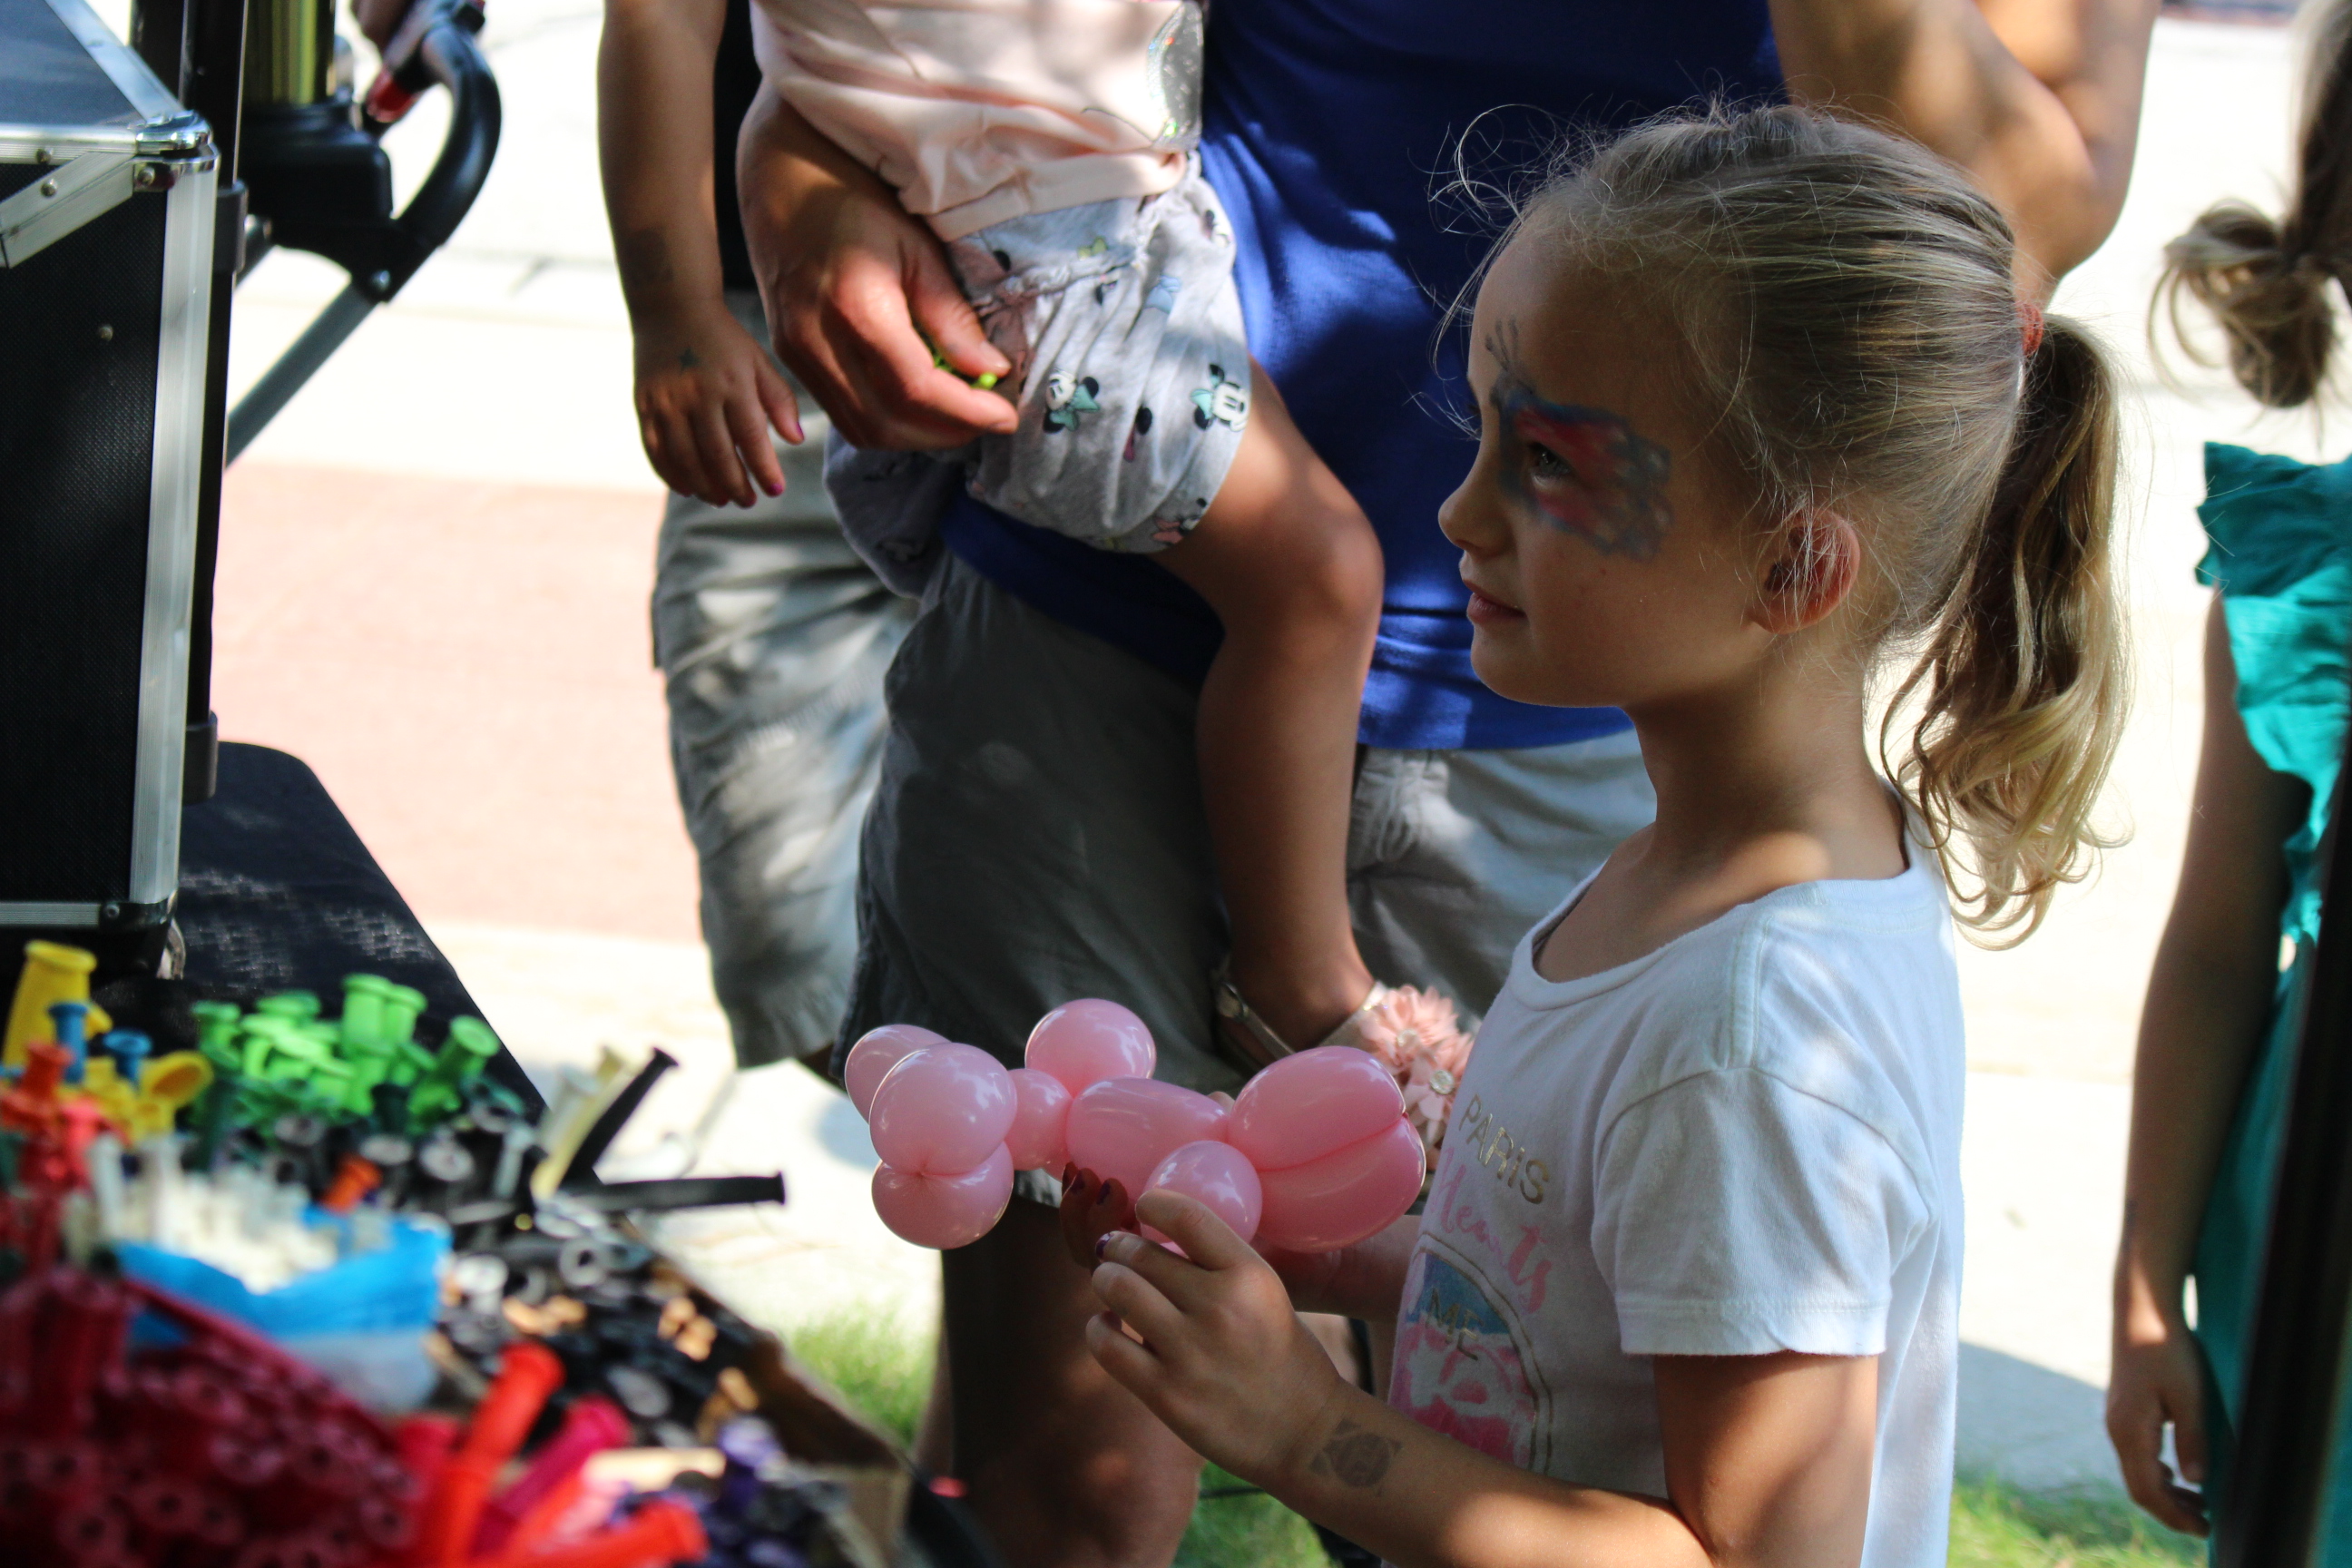 Girl holding balloon animal